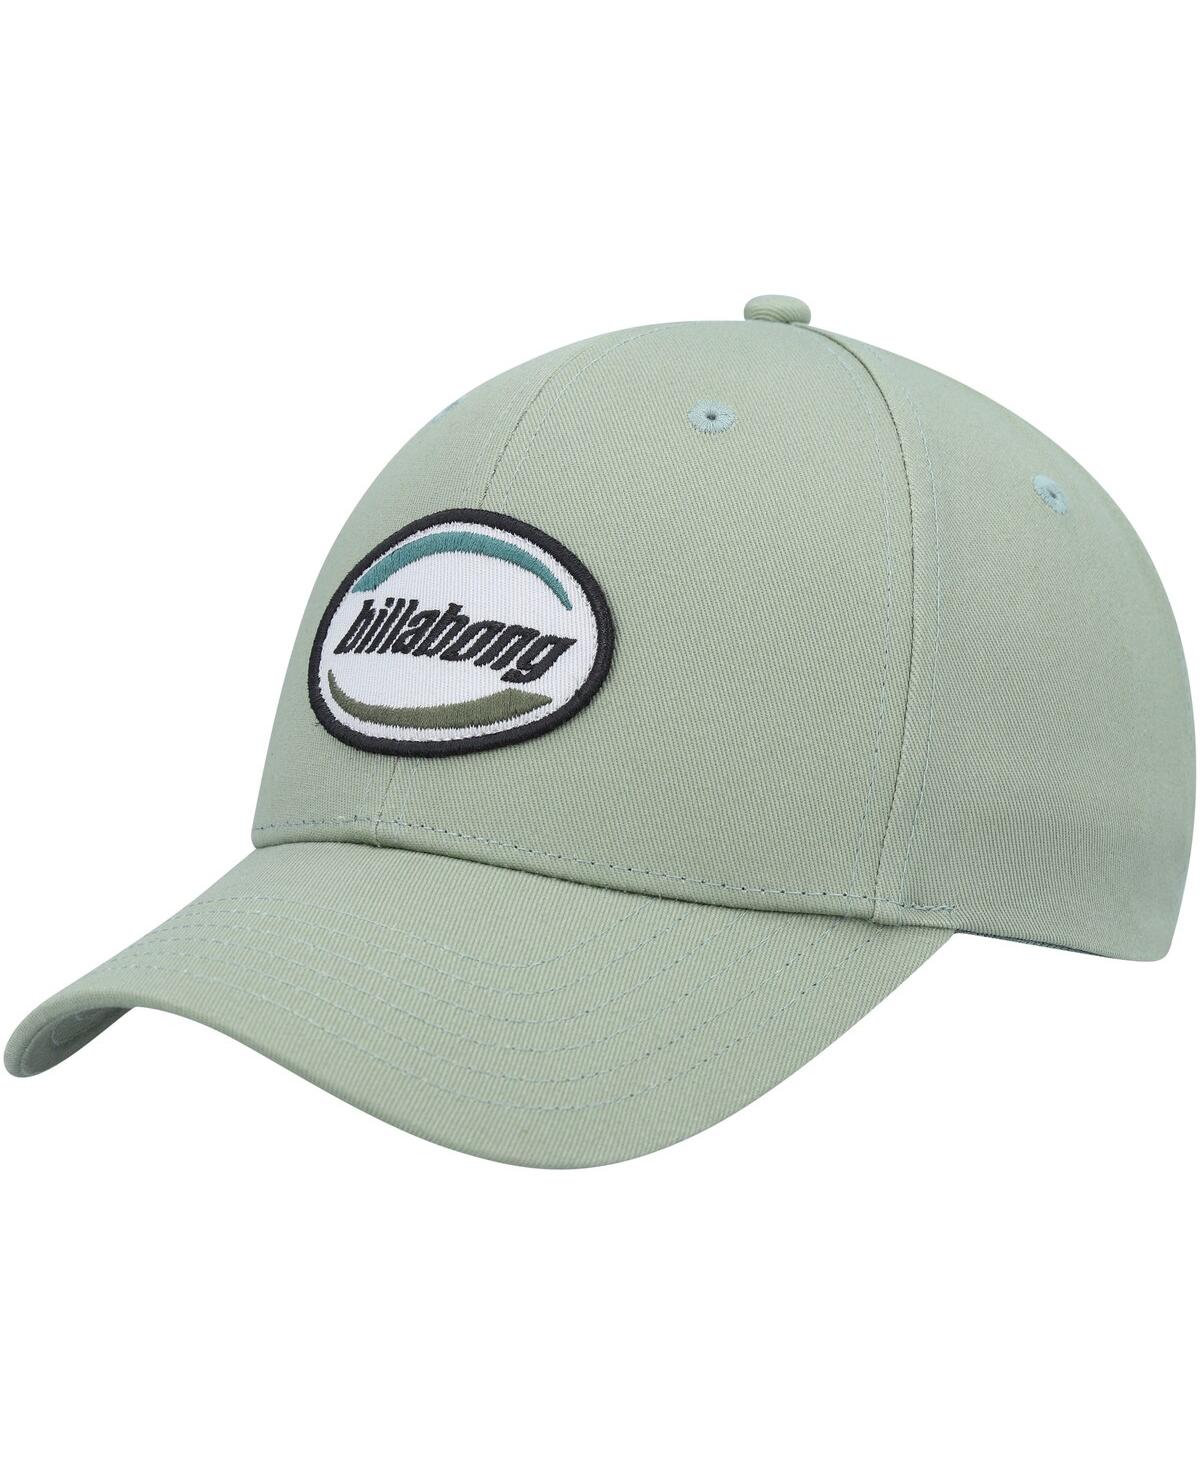 Men's Billabong Green Walled Snapback Hat - Green